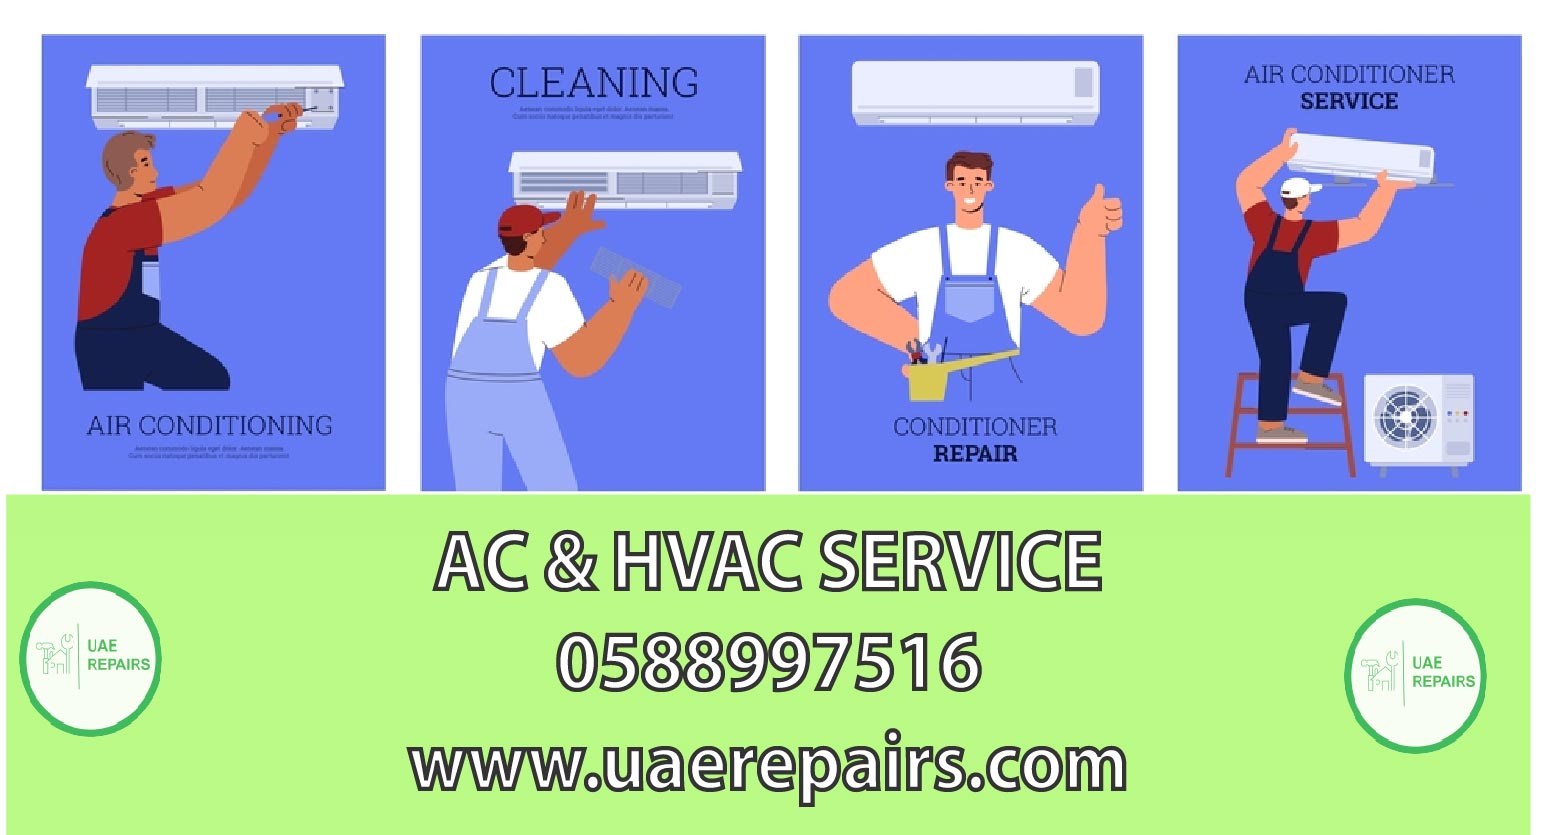 UAE REPAIRS AC & HVAC SERVICES AC & HVAC : INSTALLATION, REPALCE, REPAIR, SERVICING AND MAINTENANCE